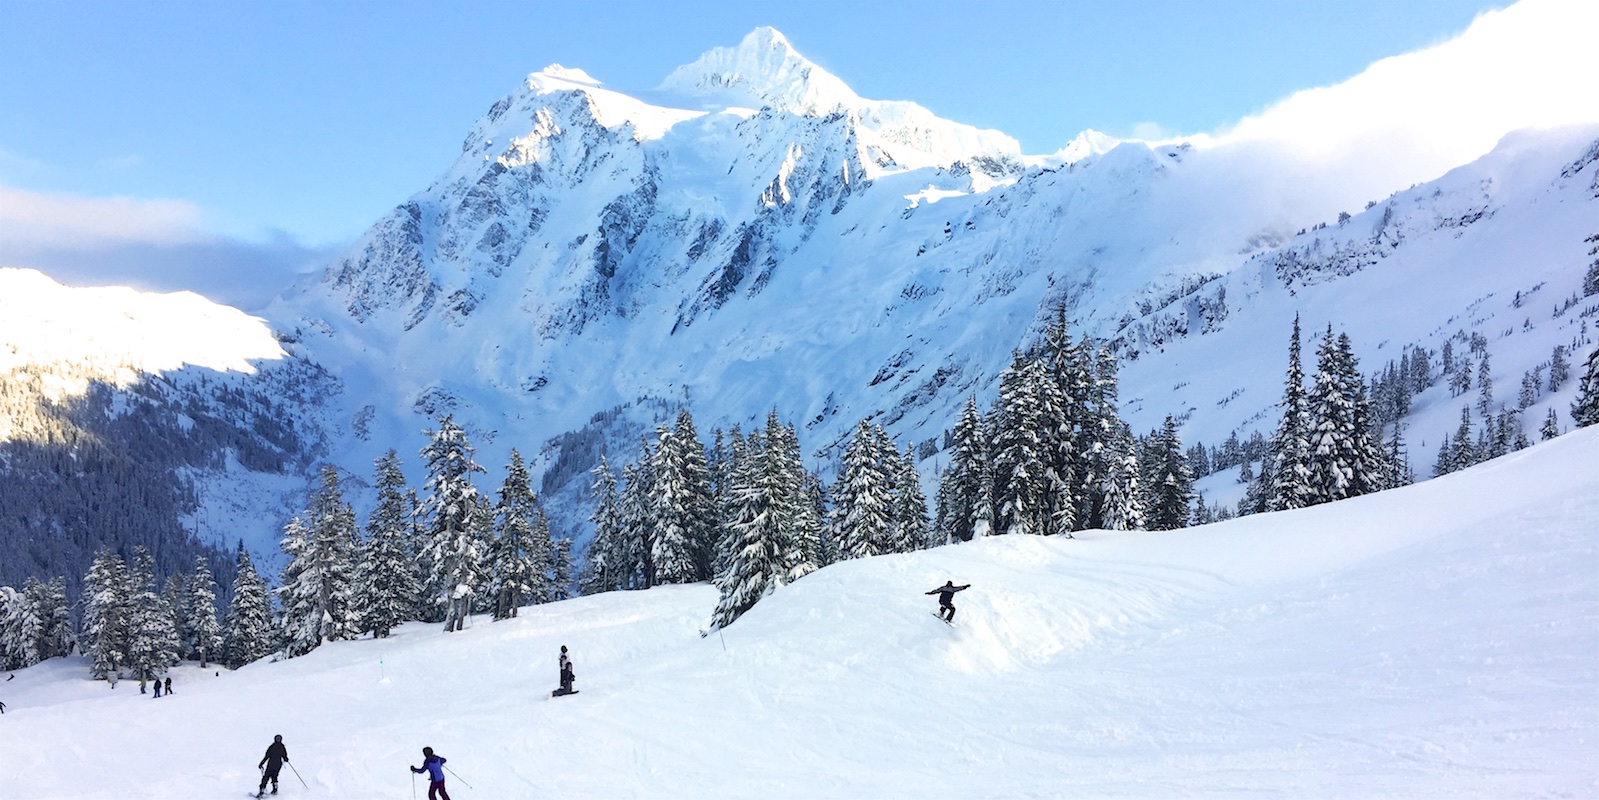 Rental accommodation for your Mt Baker ski trip